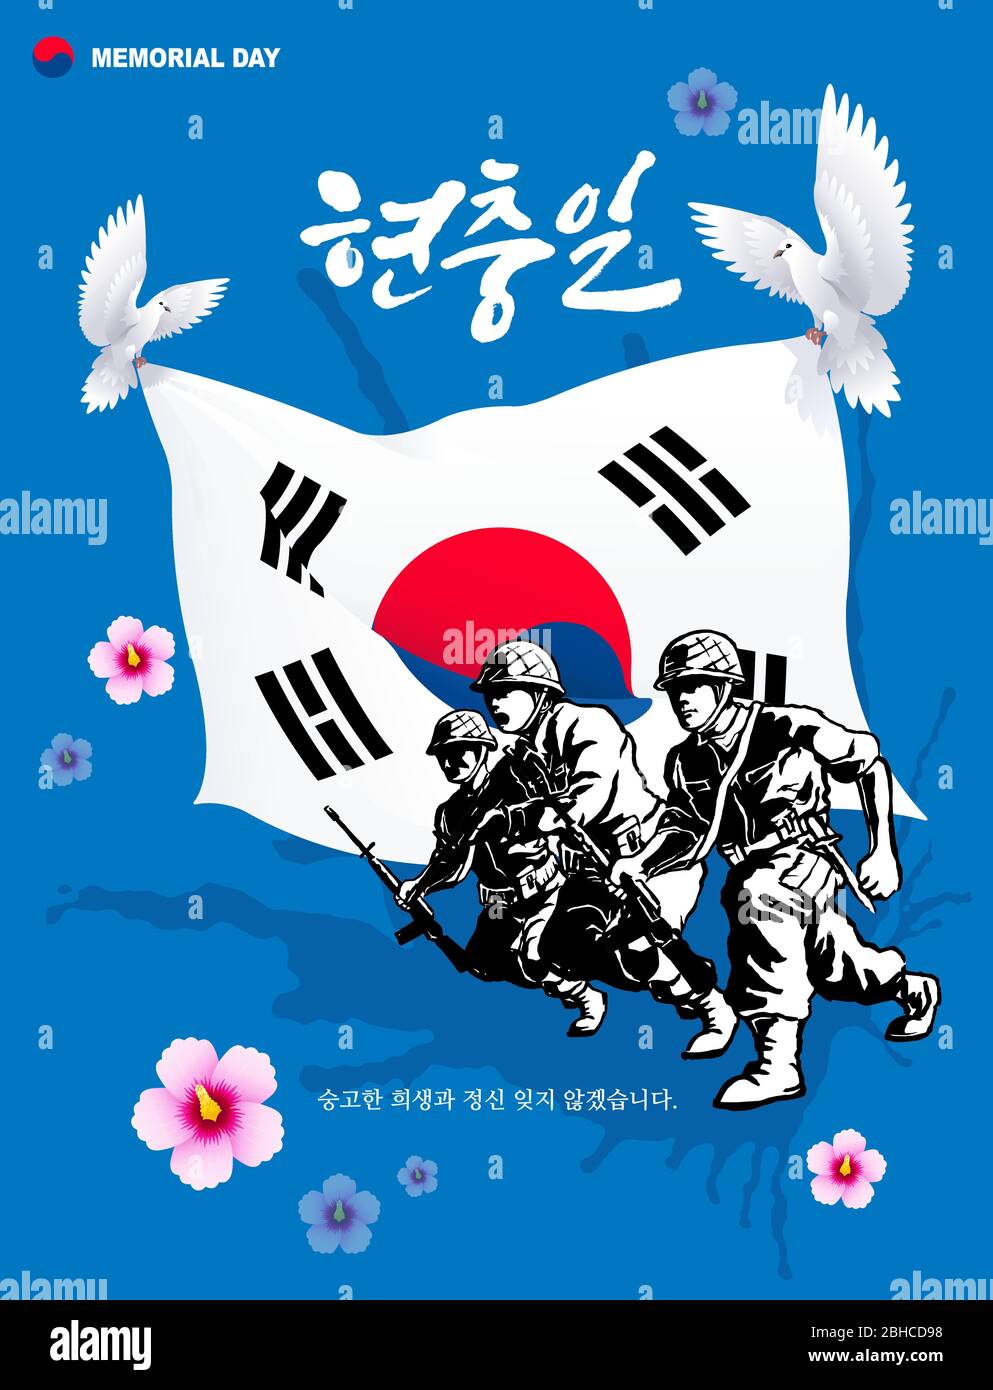 Memorial Day in Korea. Taube und flatternd Taegeukgi, Koreanischer Krieg tapfere Soldat Konzept Design. Koreanischer Memorial Day, Koreanisch Übersetzung. Stock Vektor